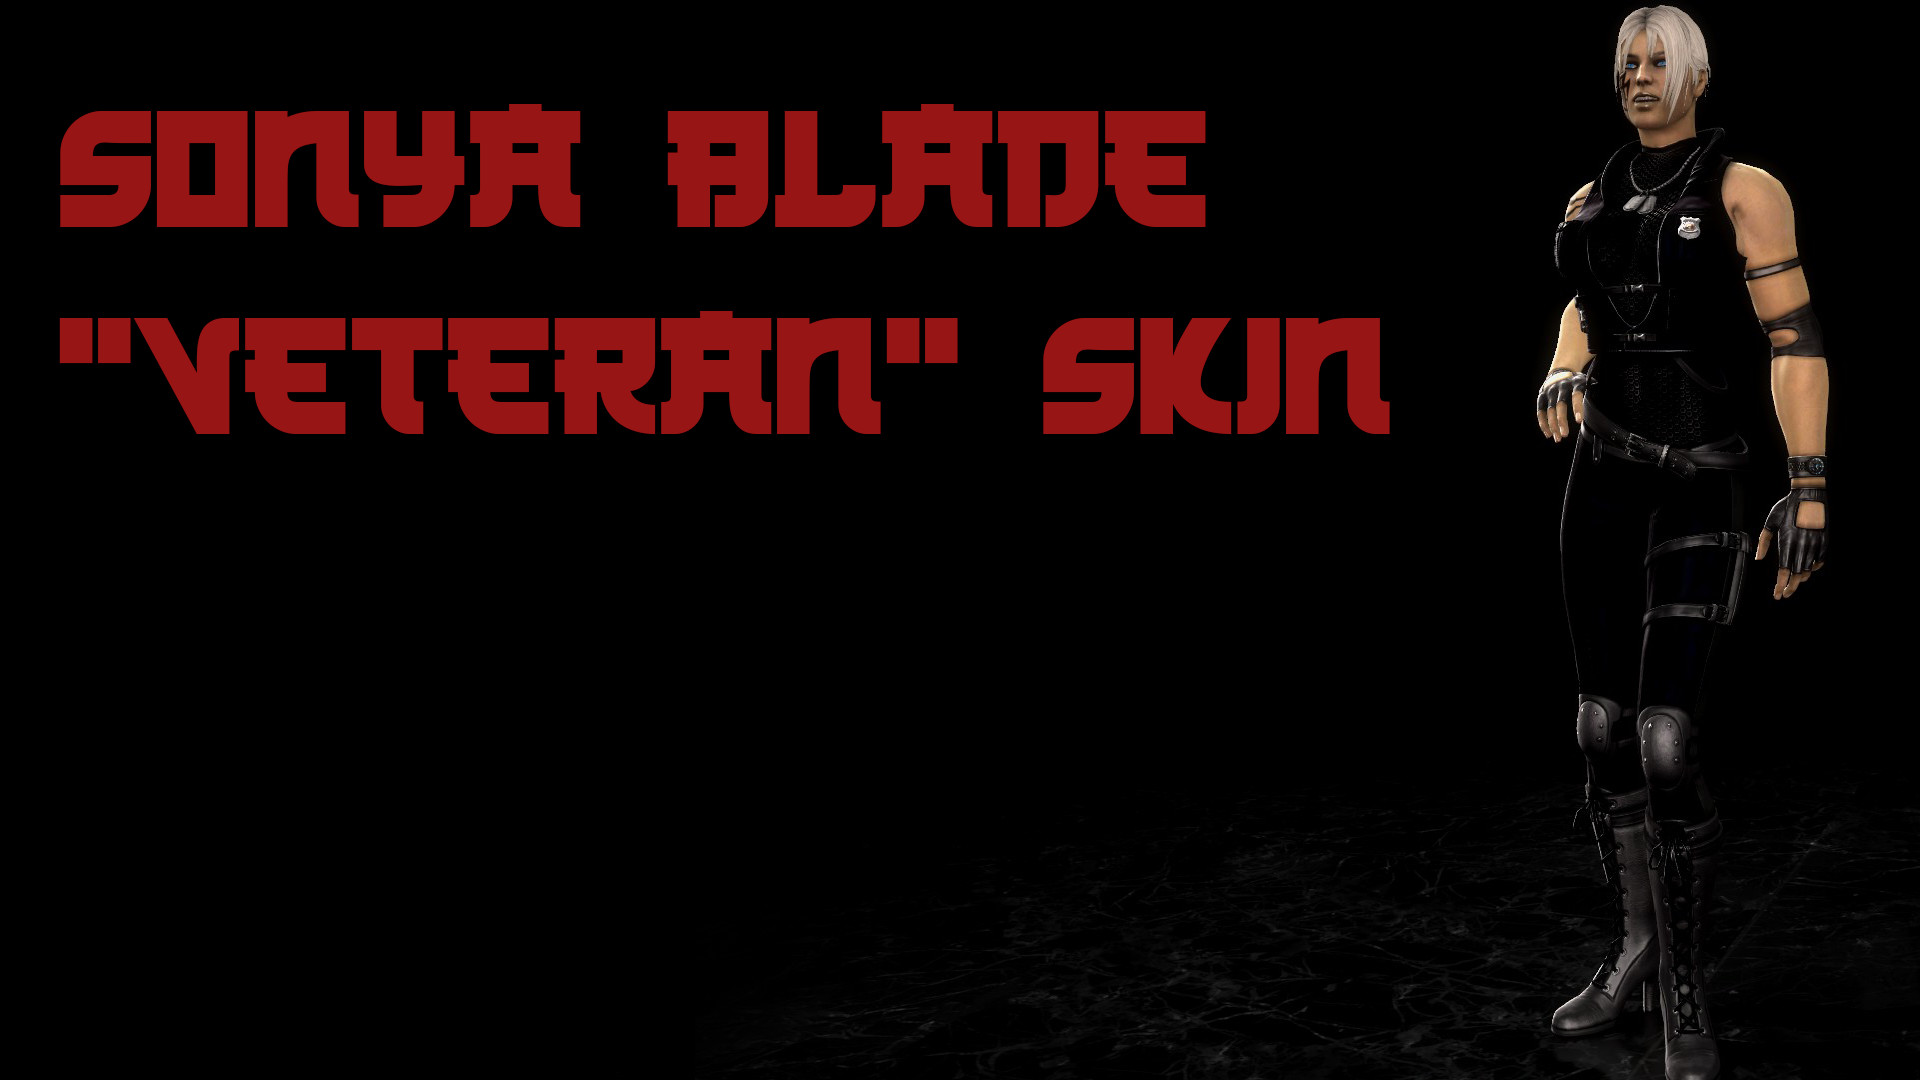 1920x1080 ... Mortal Kombat 9 Sonya Blade VETERAN Skin by Misucra